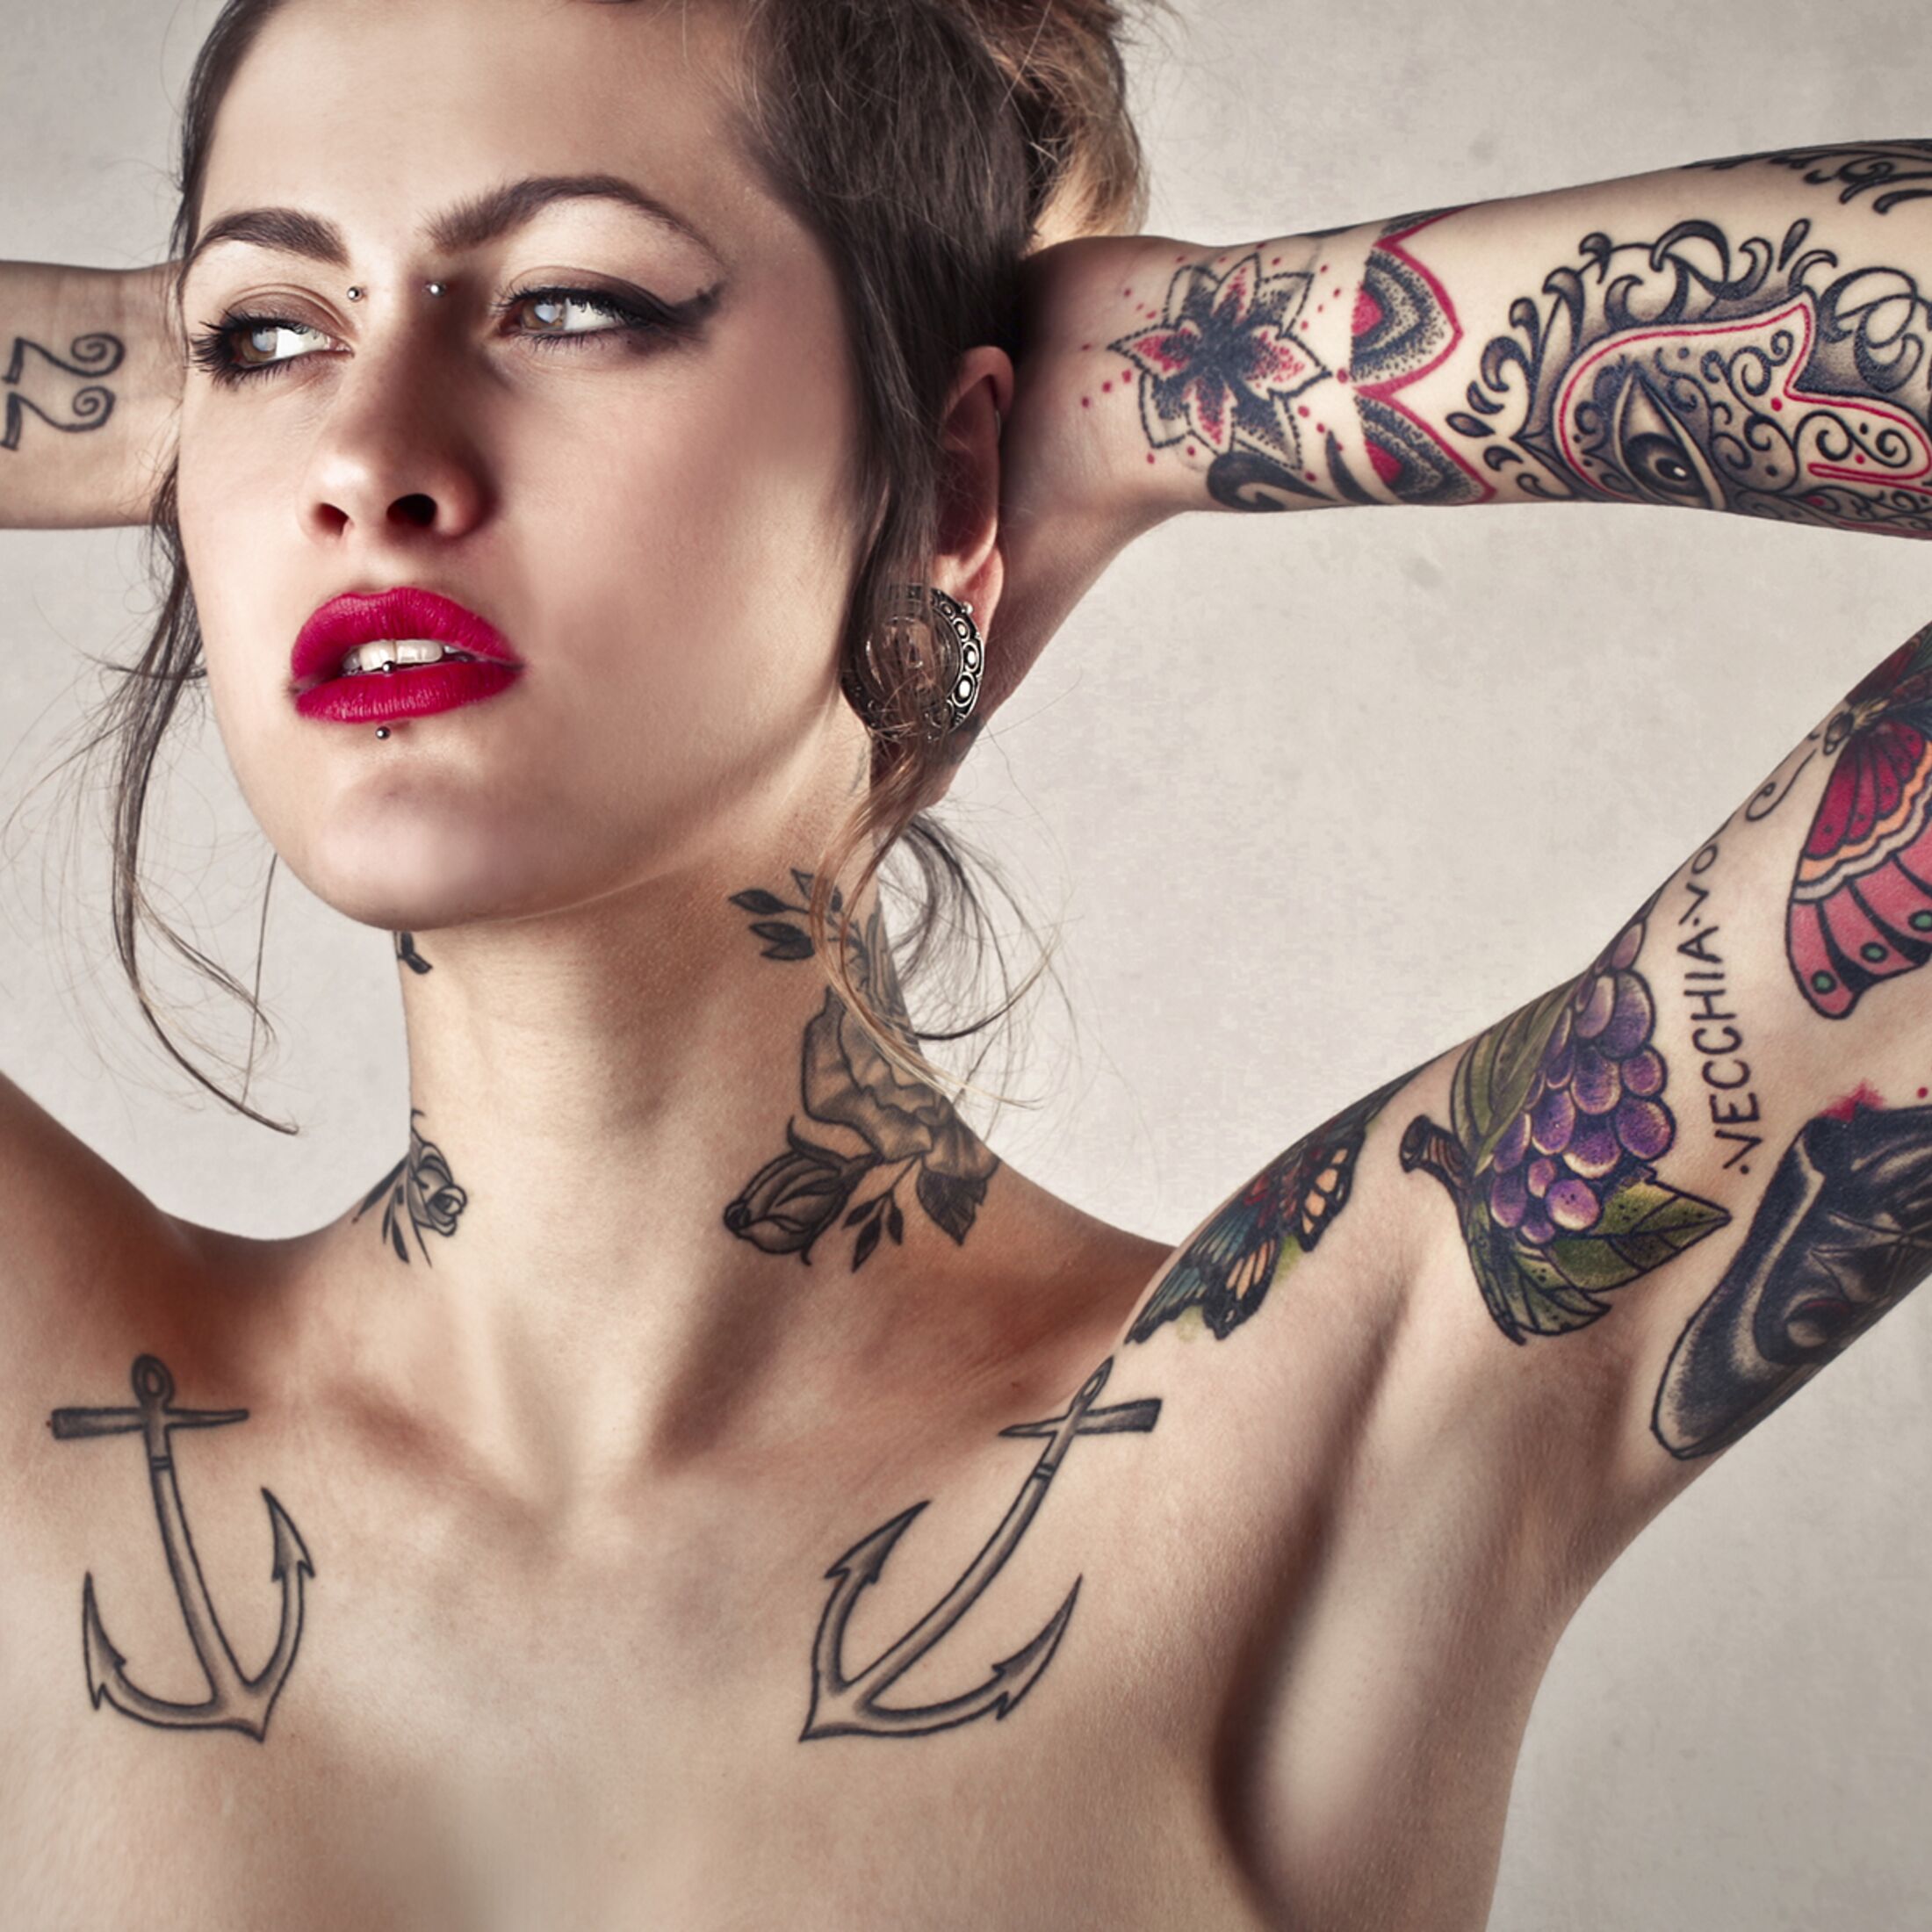 Tattoo motiv nackte brust